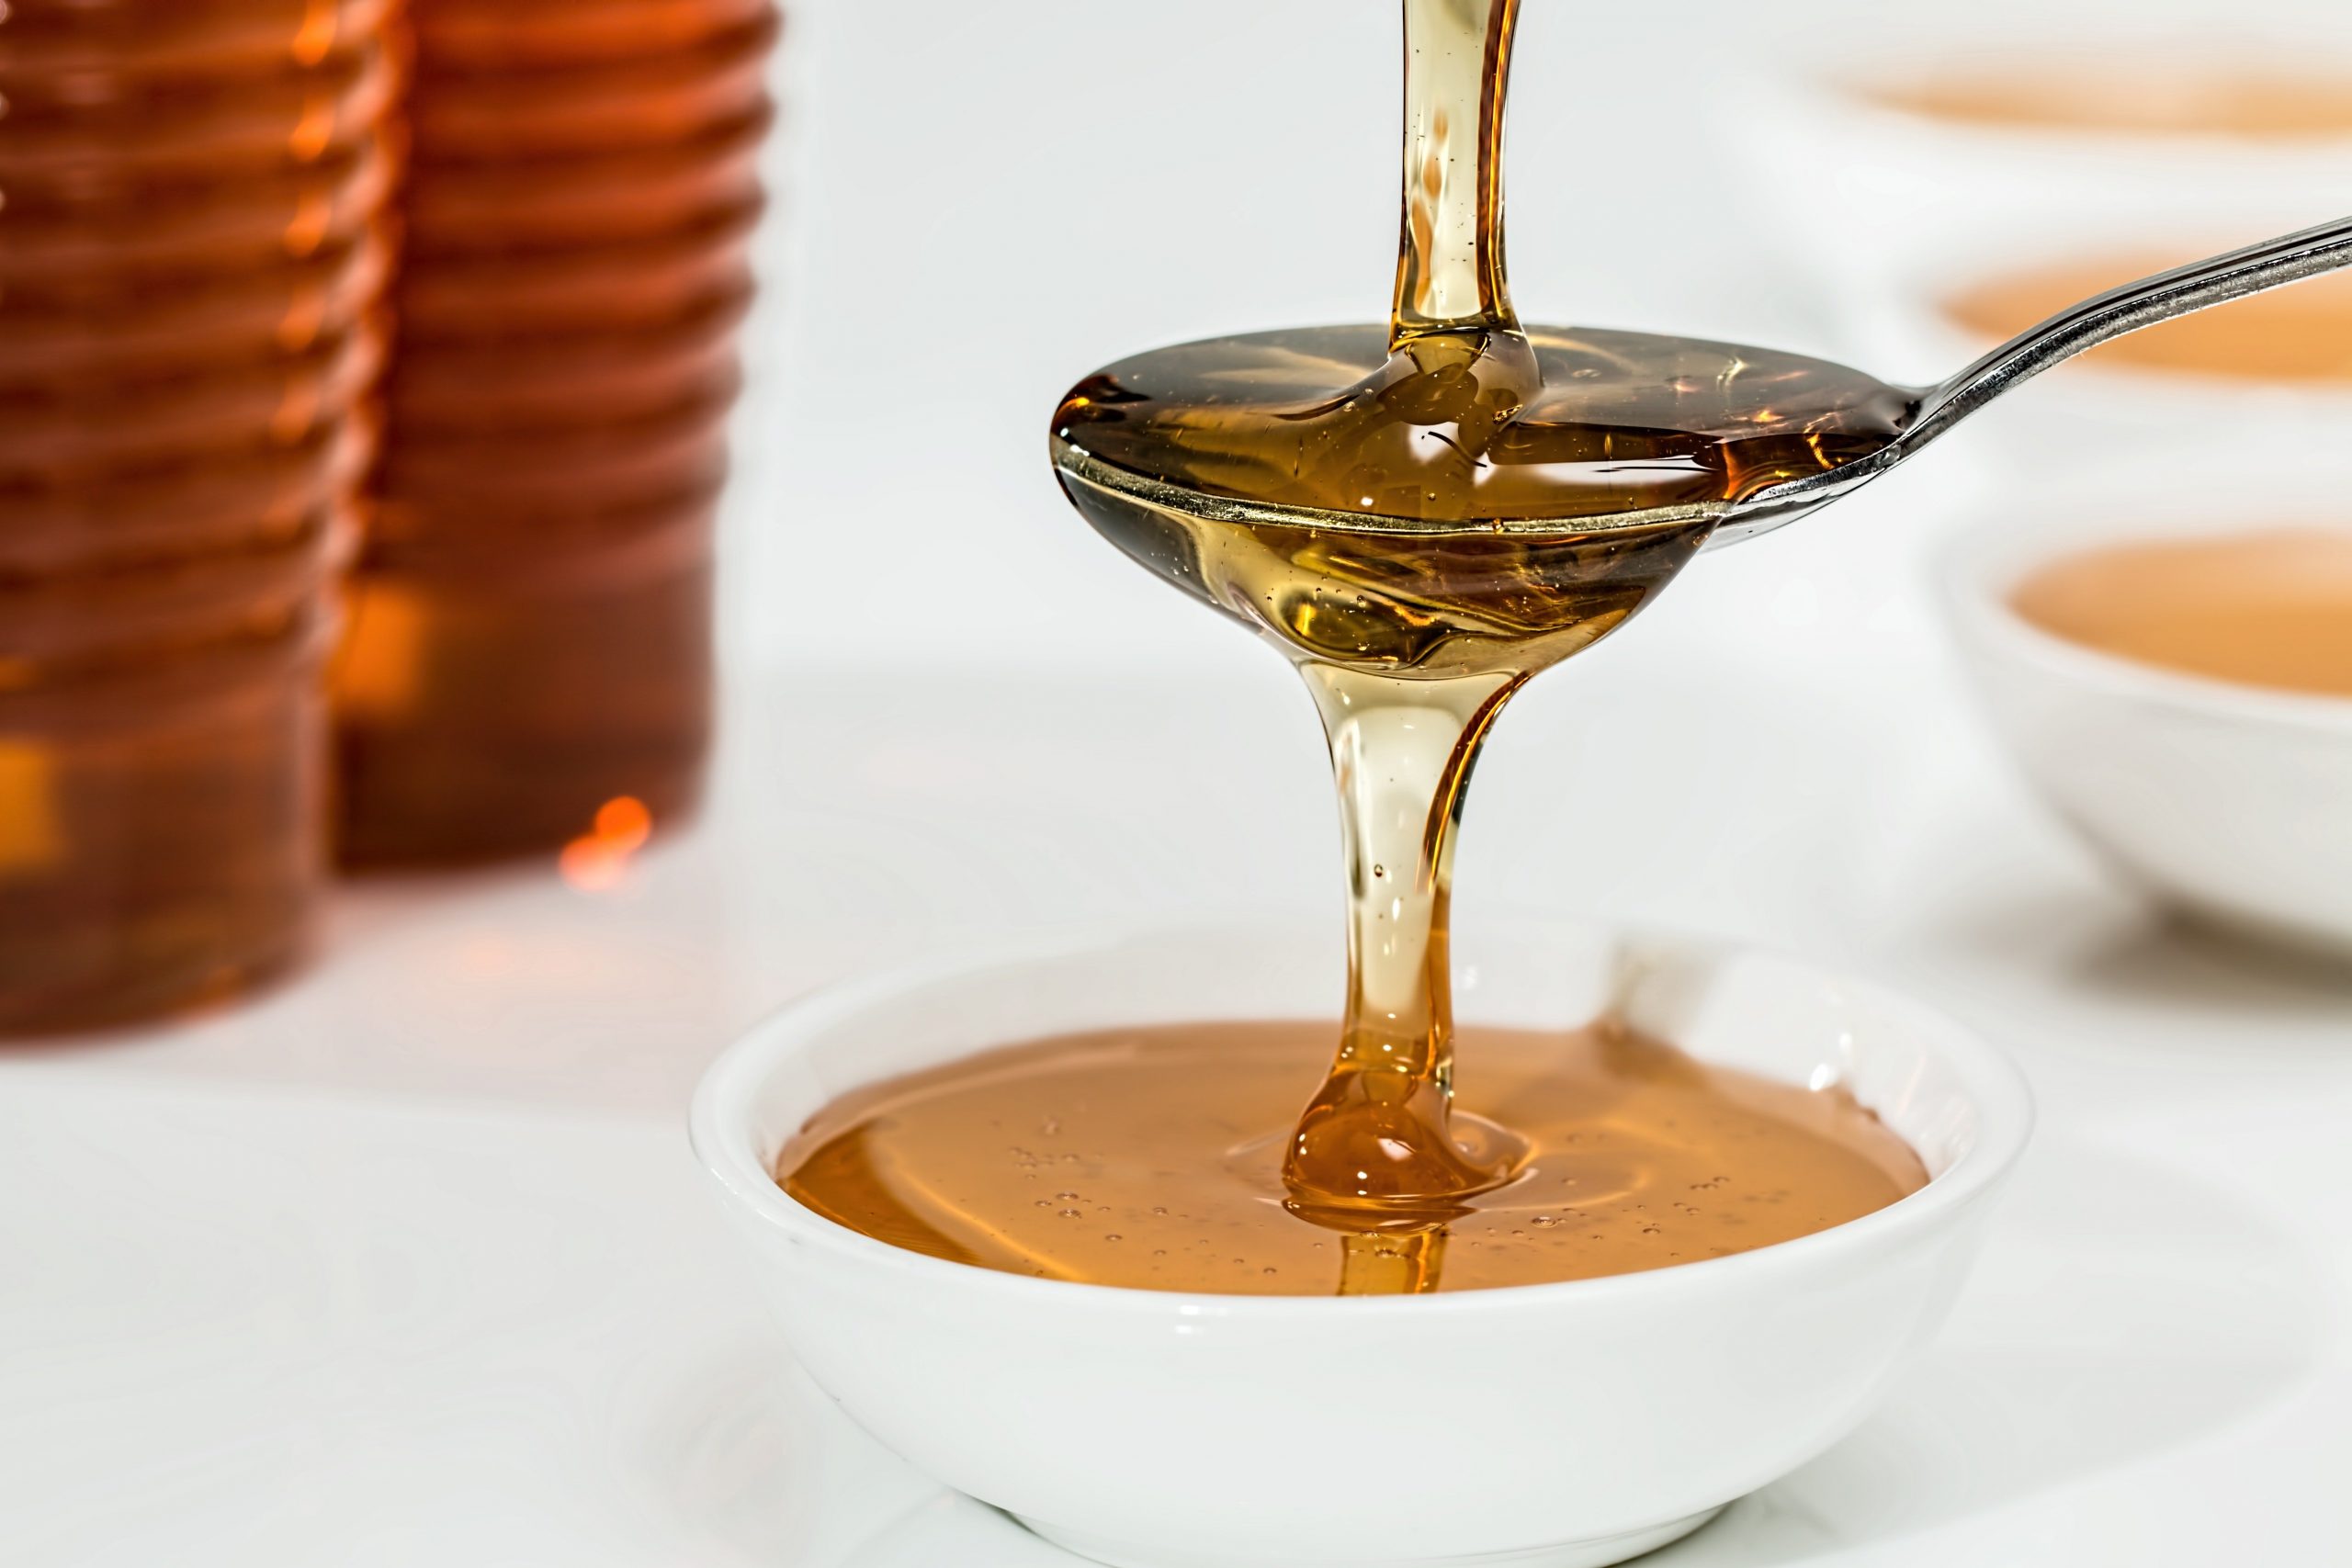 Honey as a skin remedy